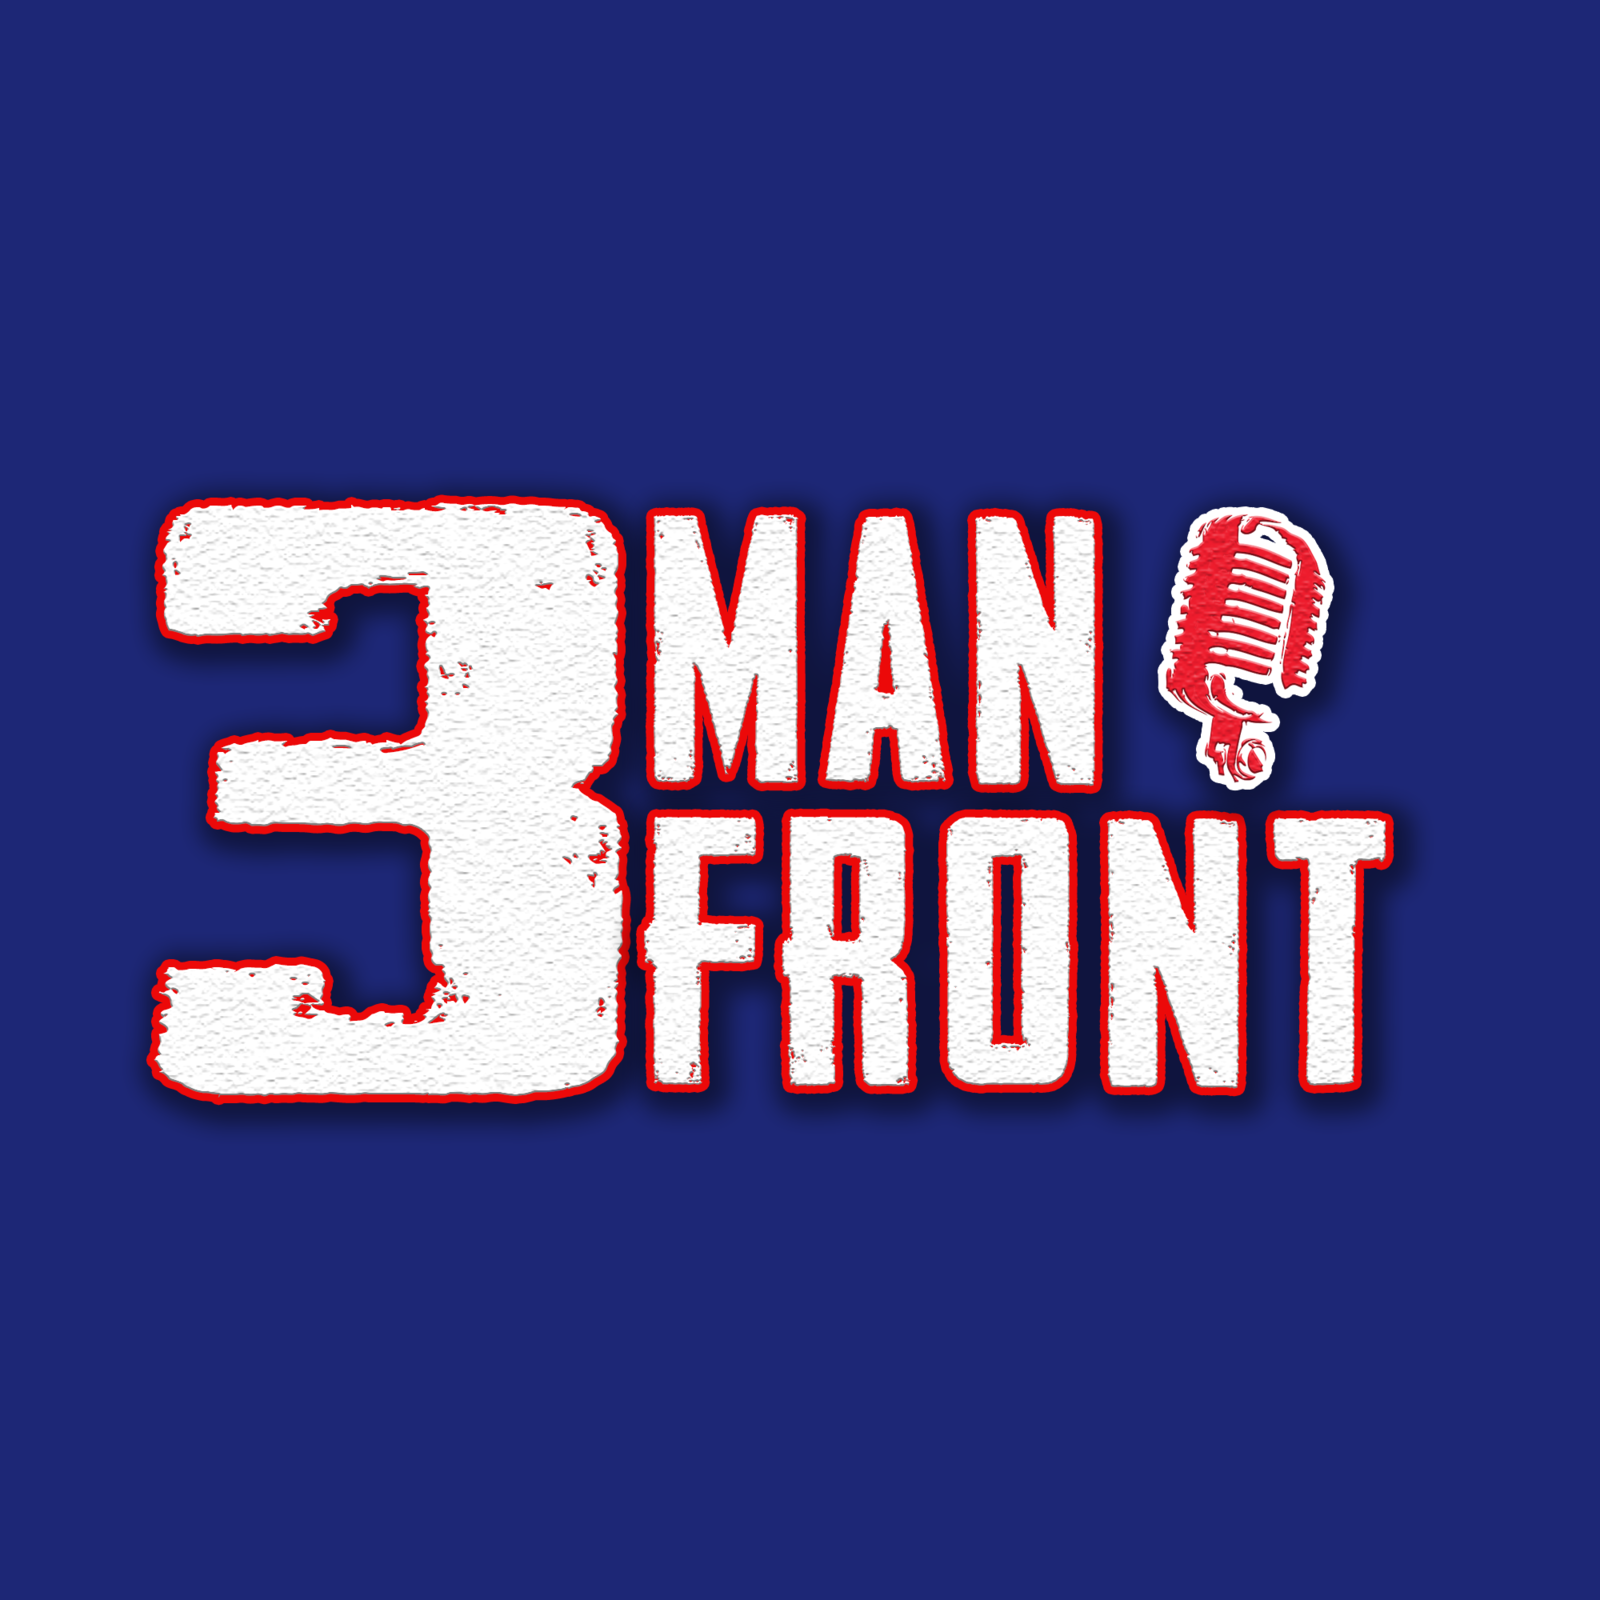 3 Man Front: Nathan King talks Auburn